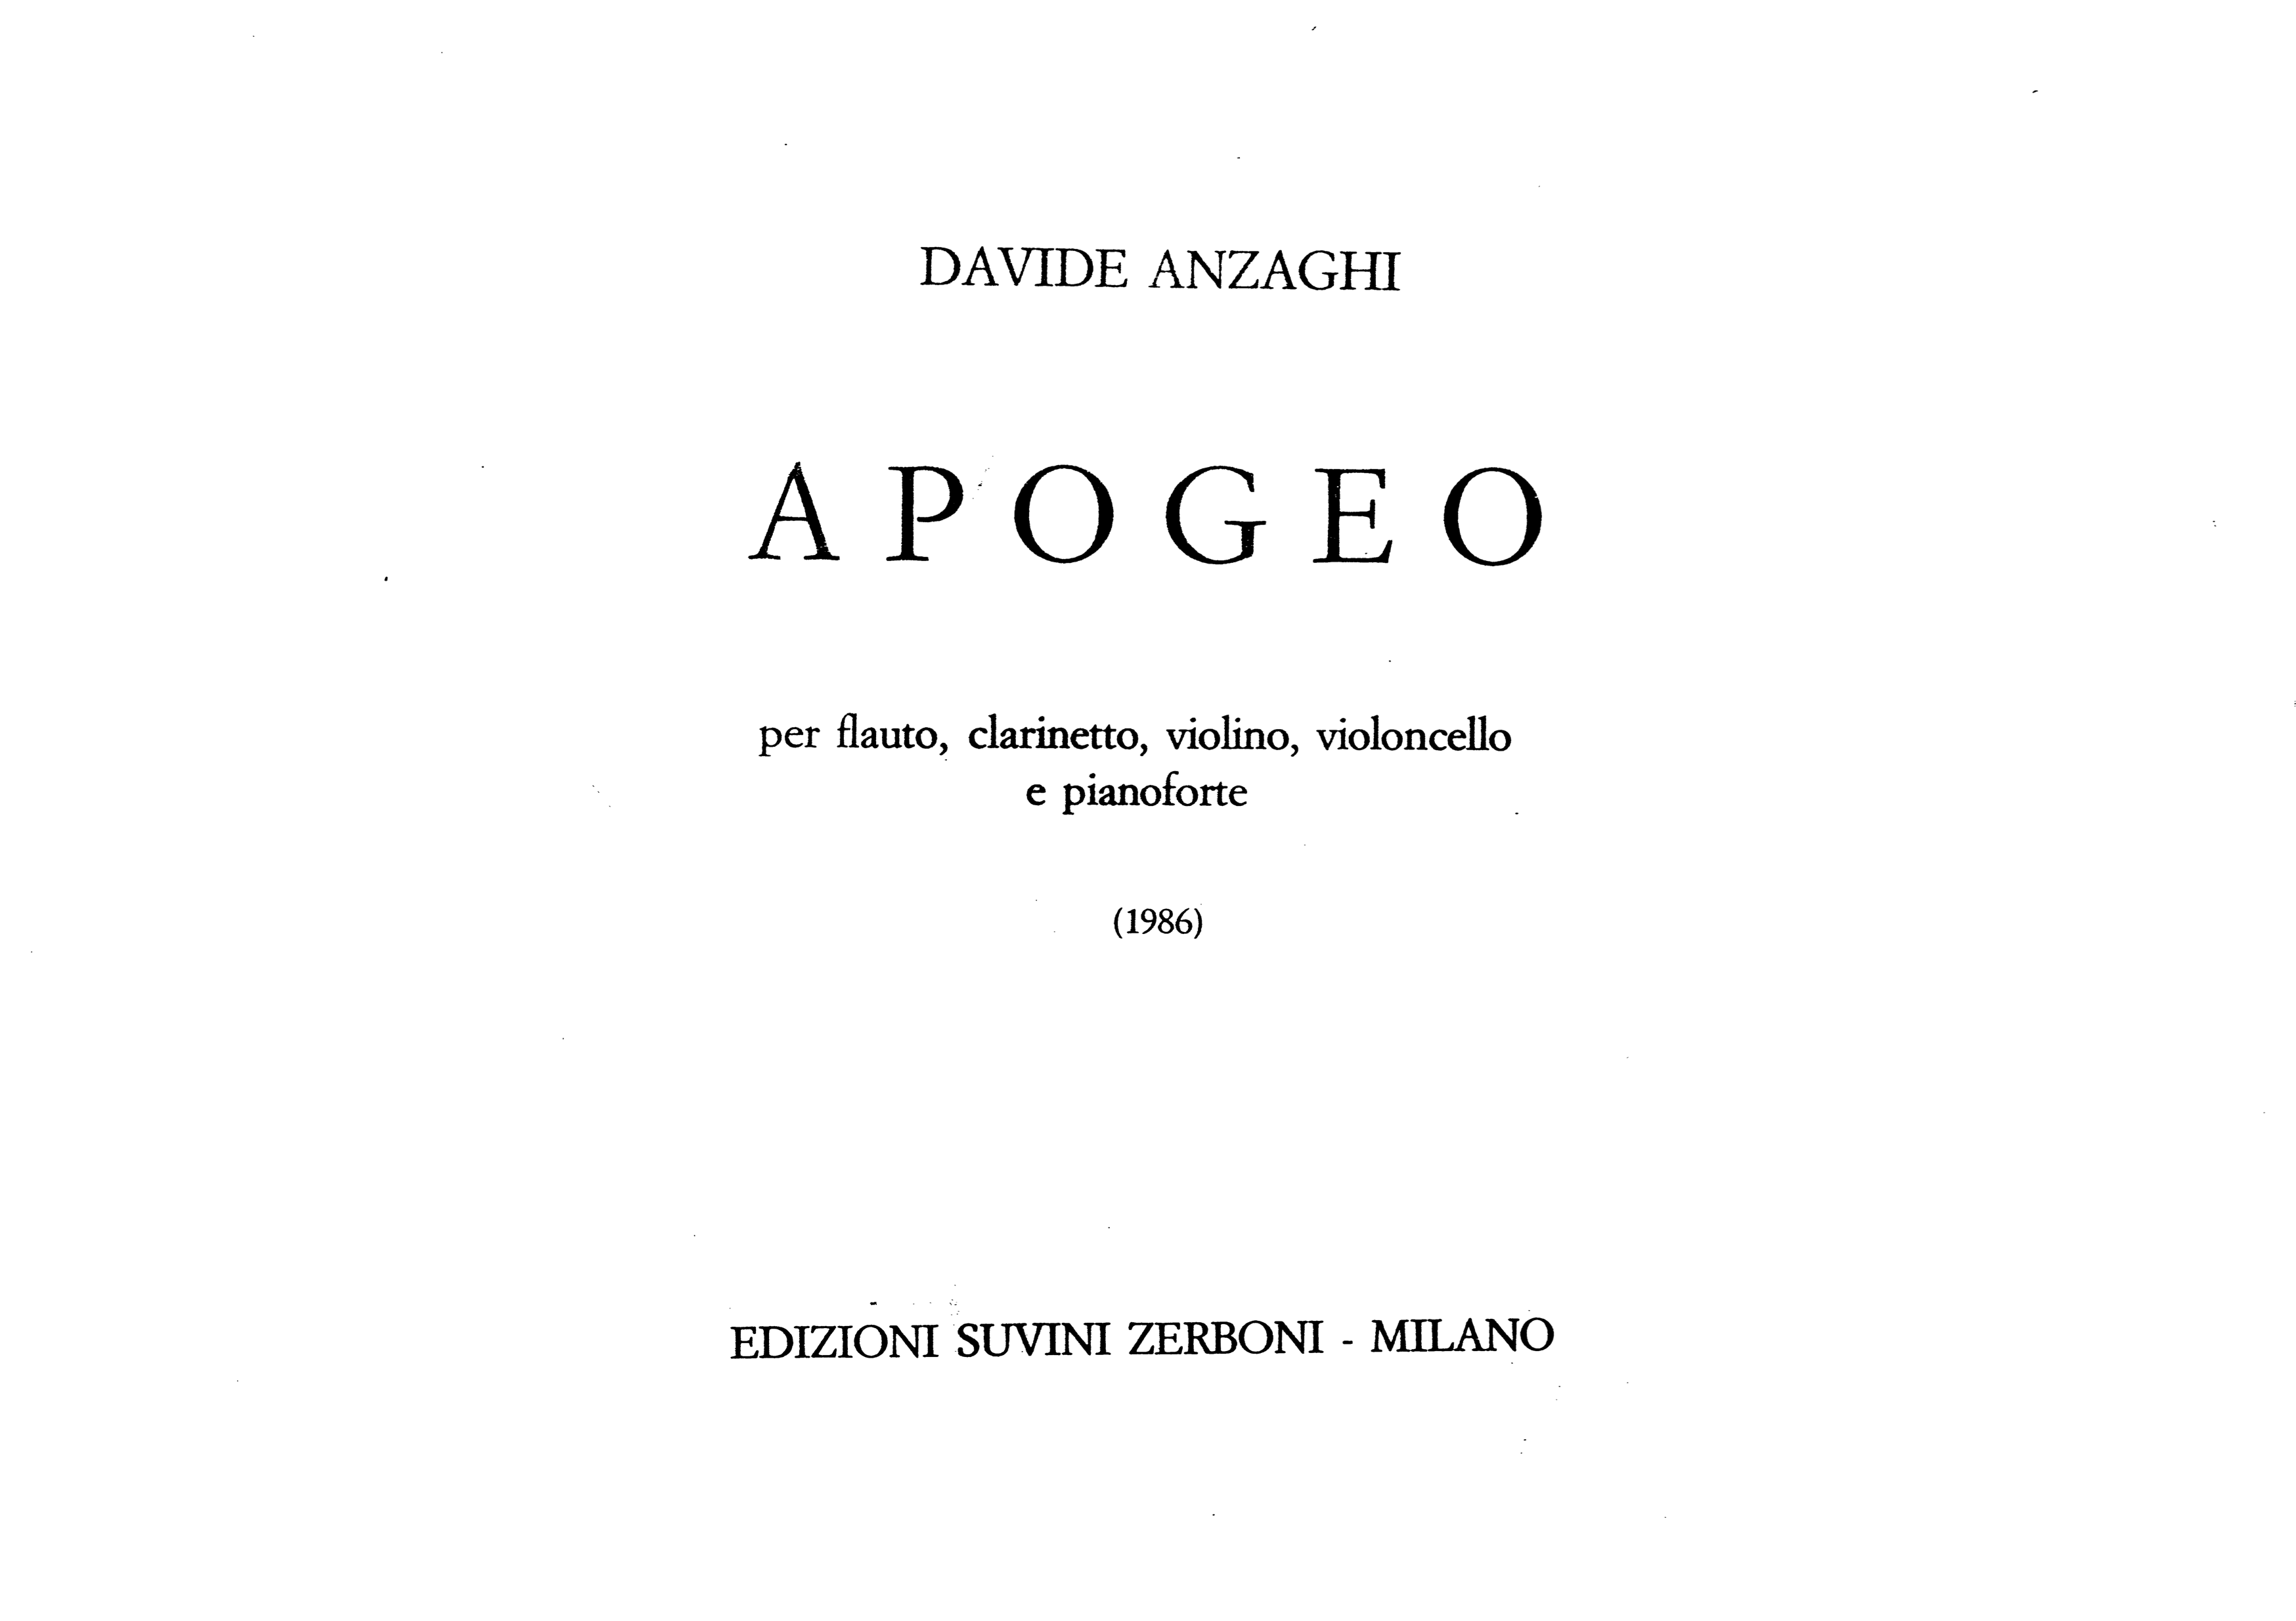 Apogeo_Anzaghi 1